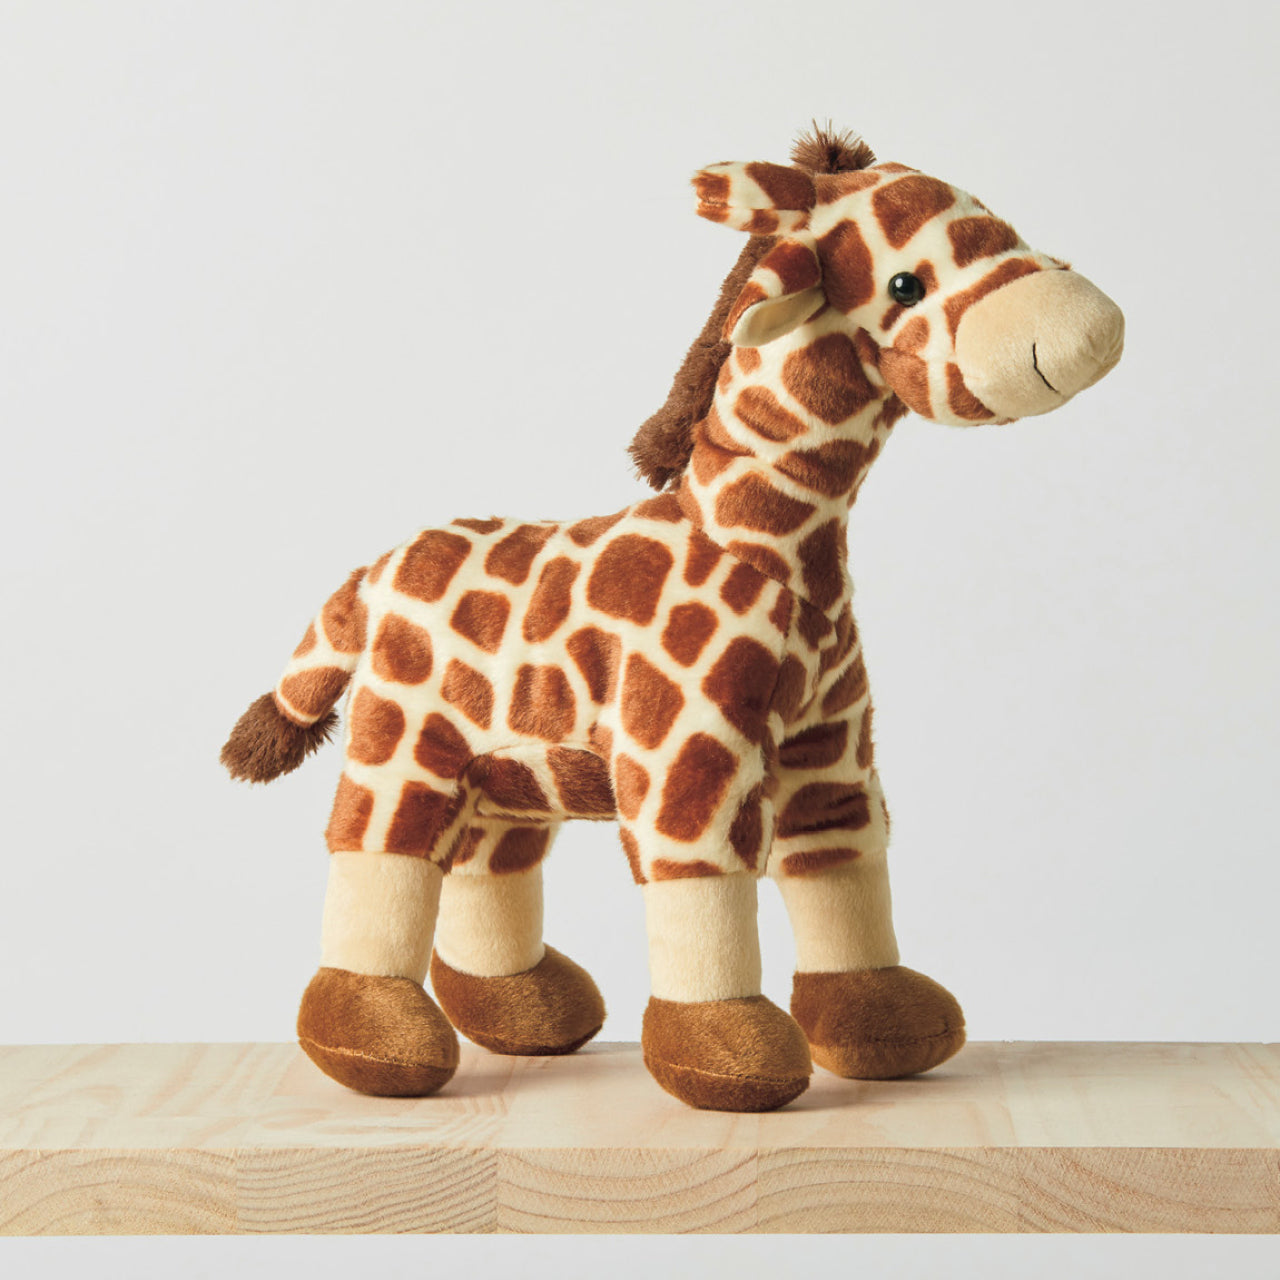 Giraffe Soft Toy standing on ledge